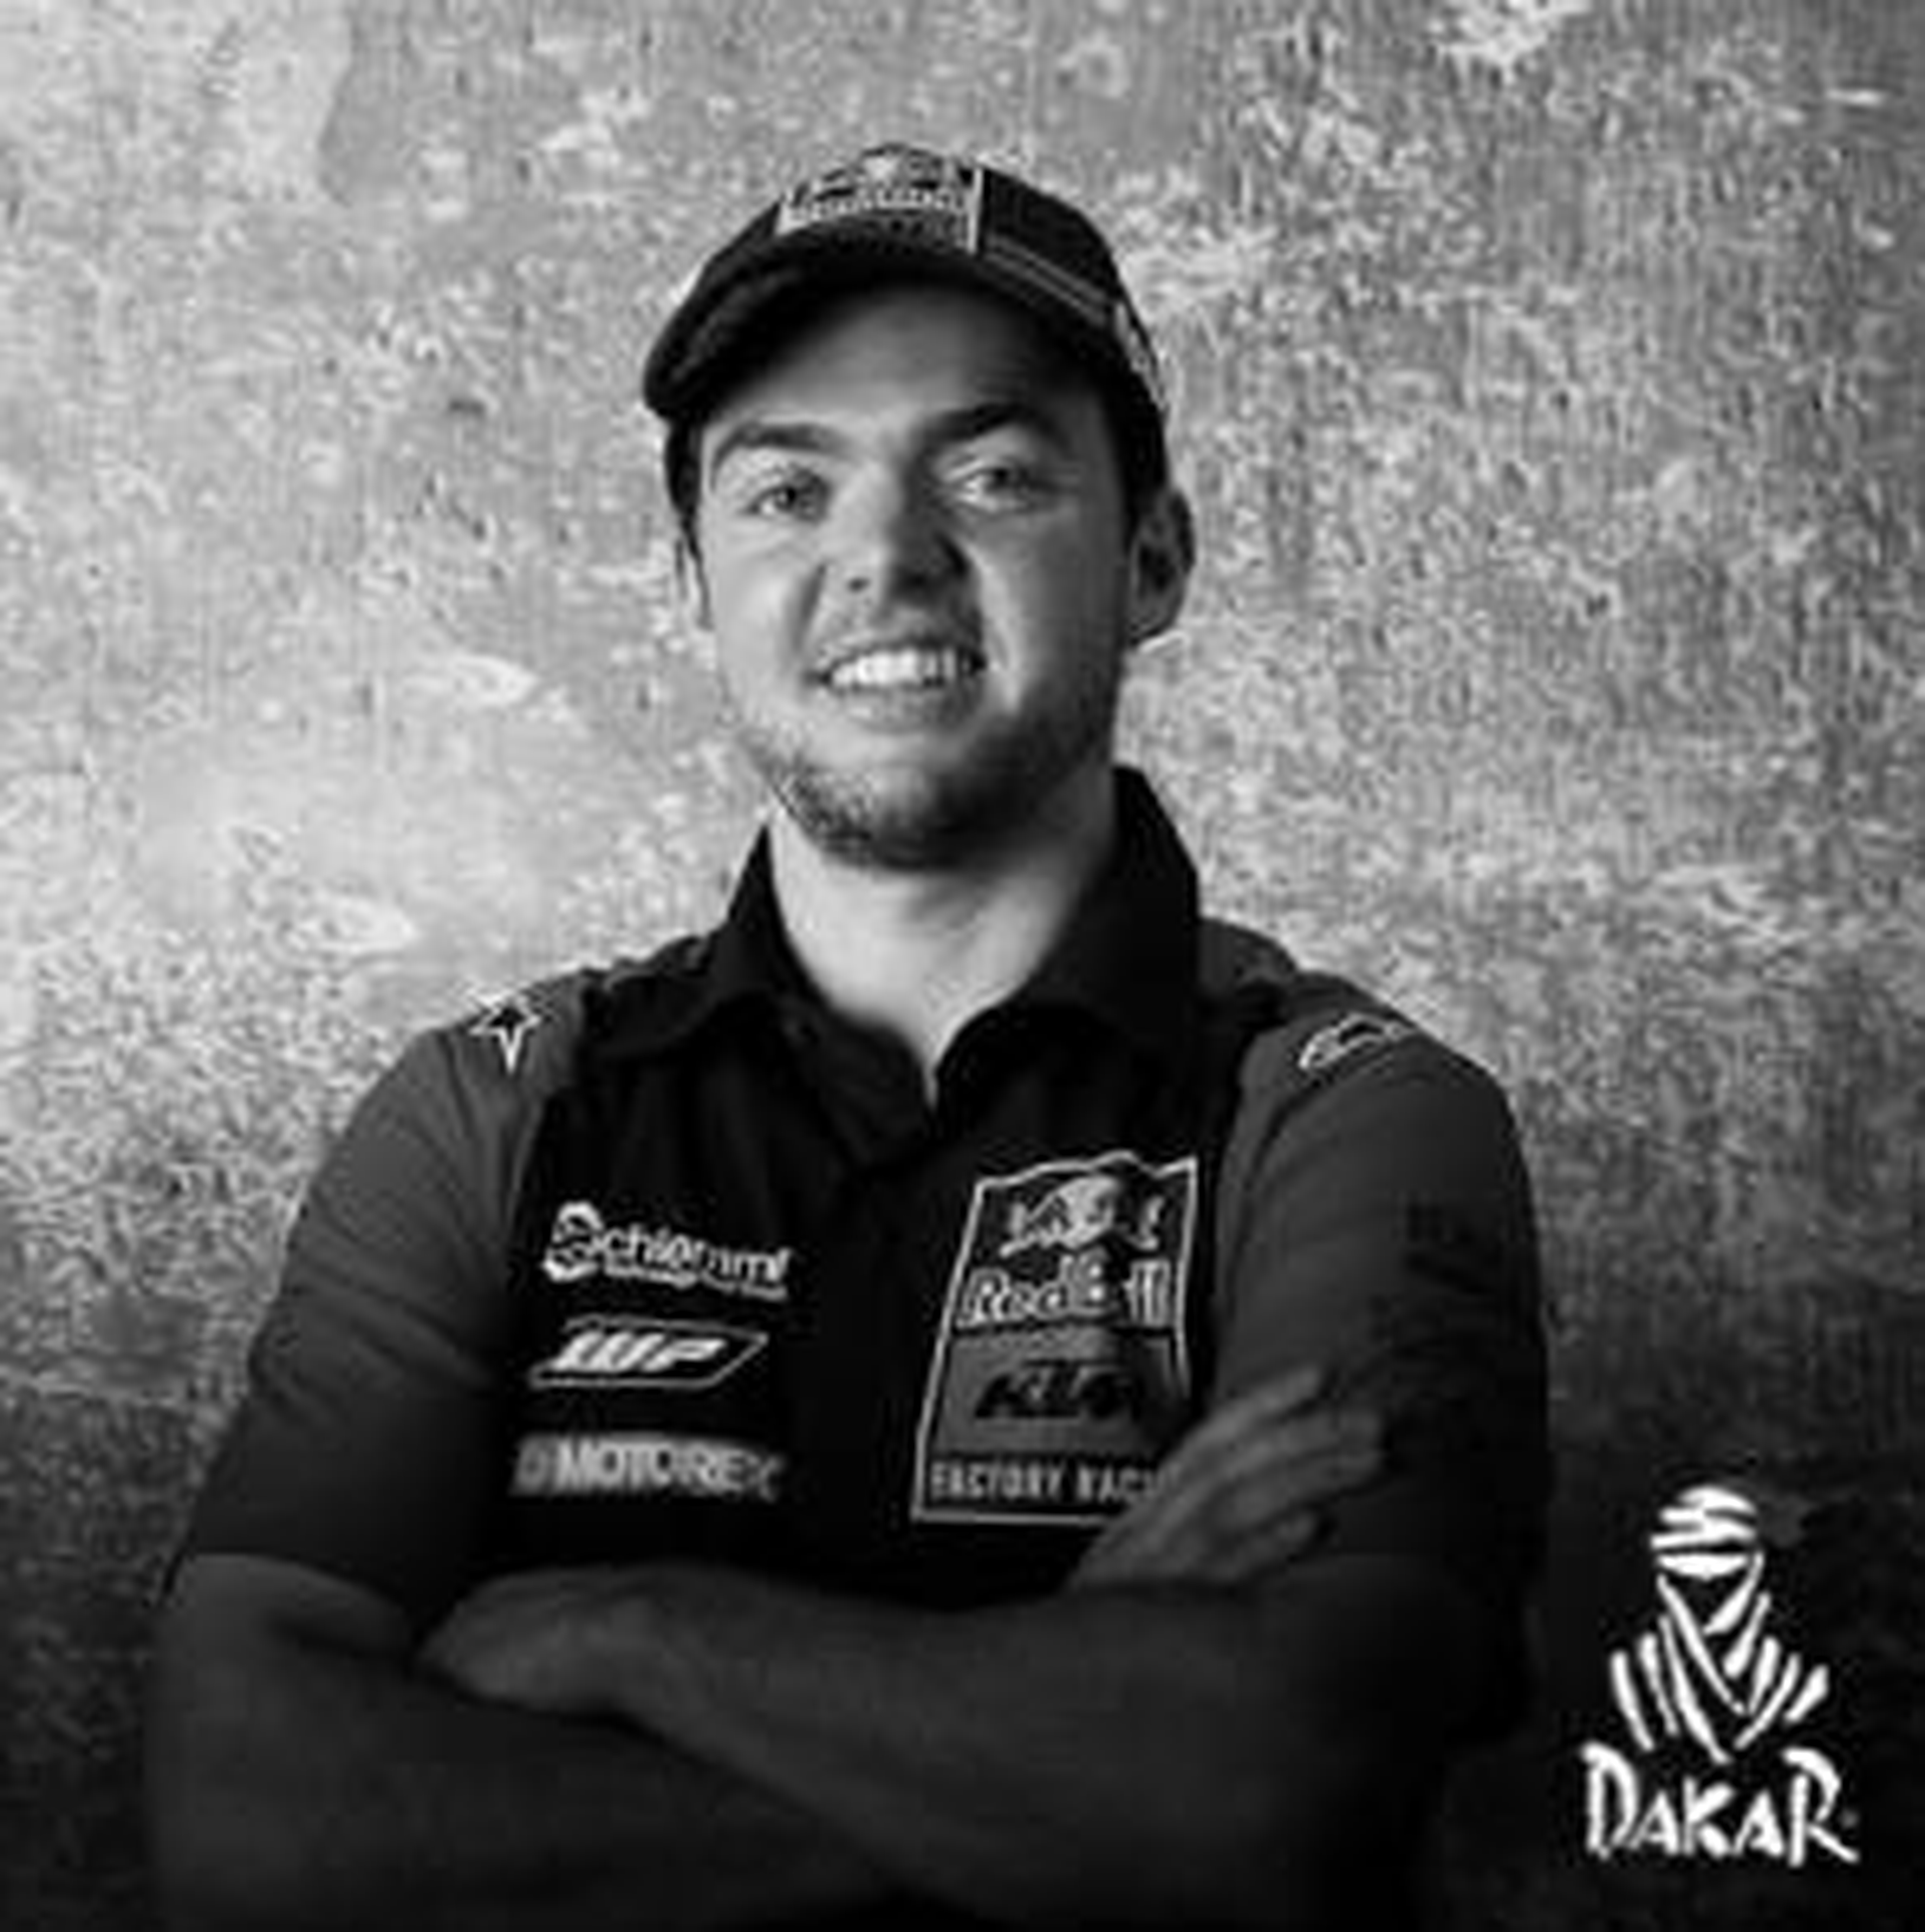 Matthias Walkner Dakar 2019